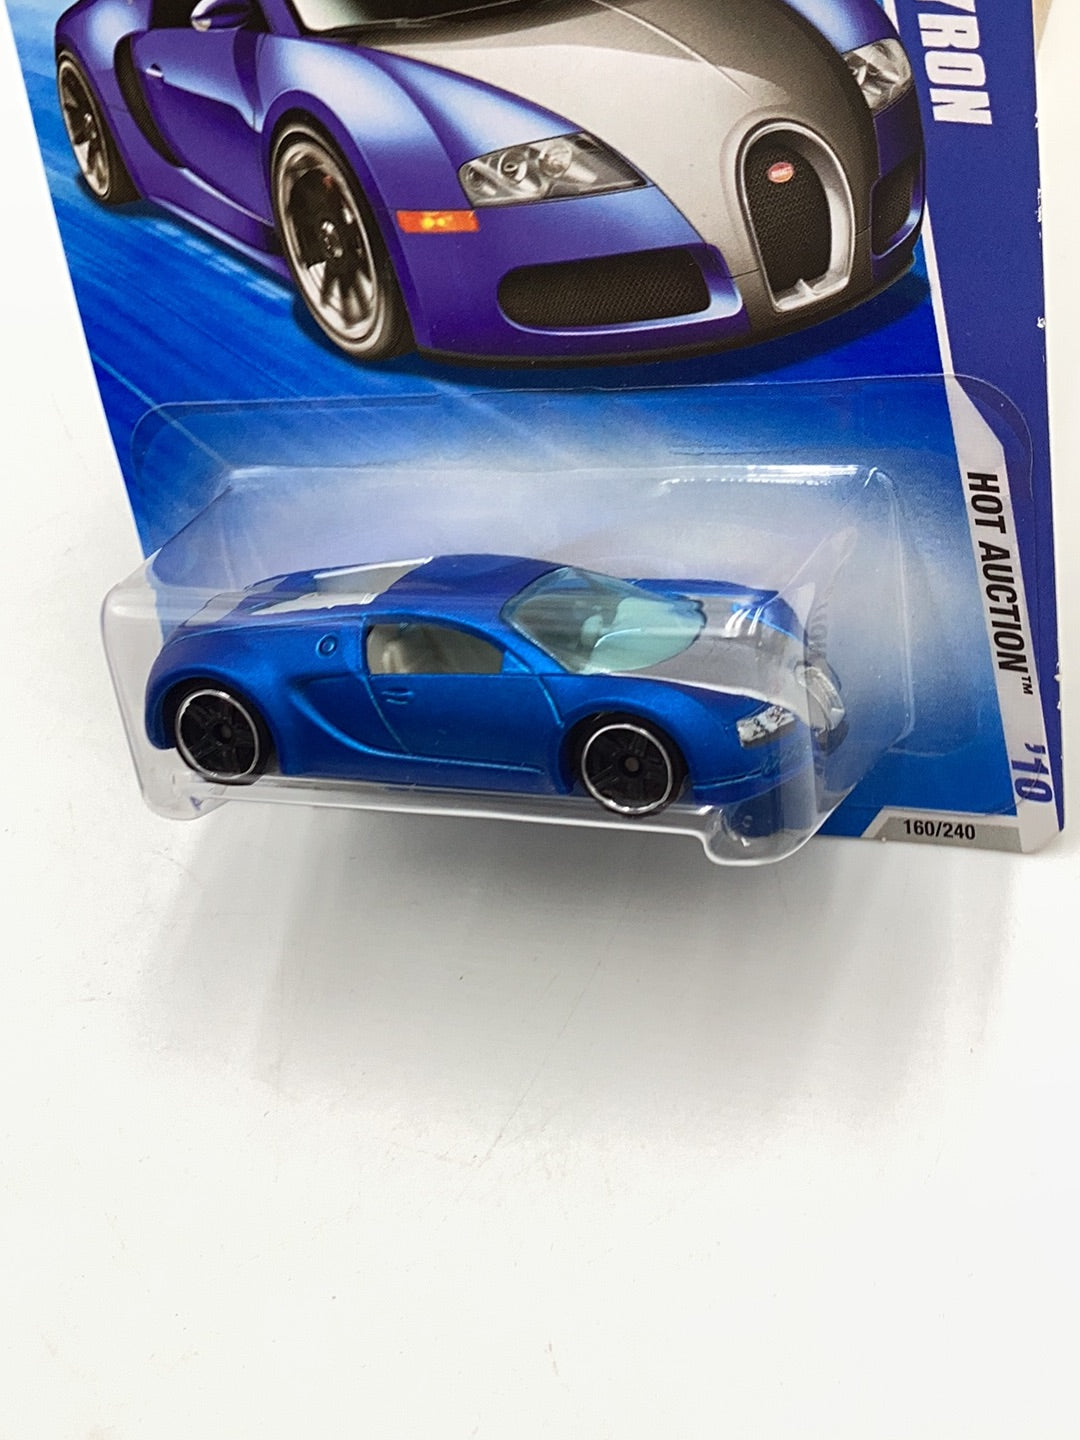 2010 Hot Wheels #160 Bugatti Veyron satin blue W/Protector